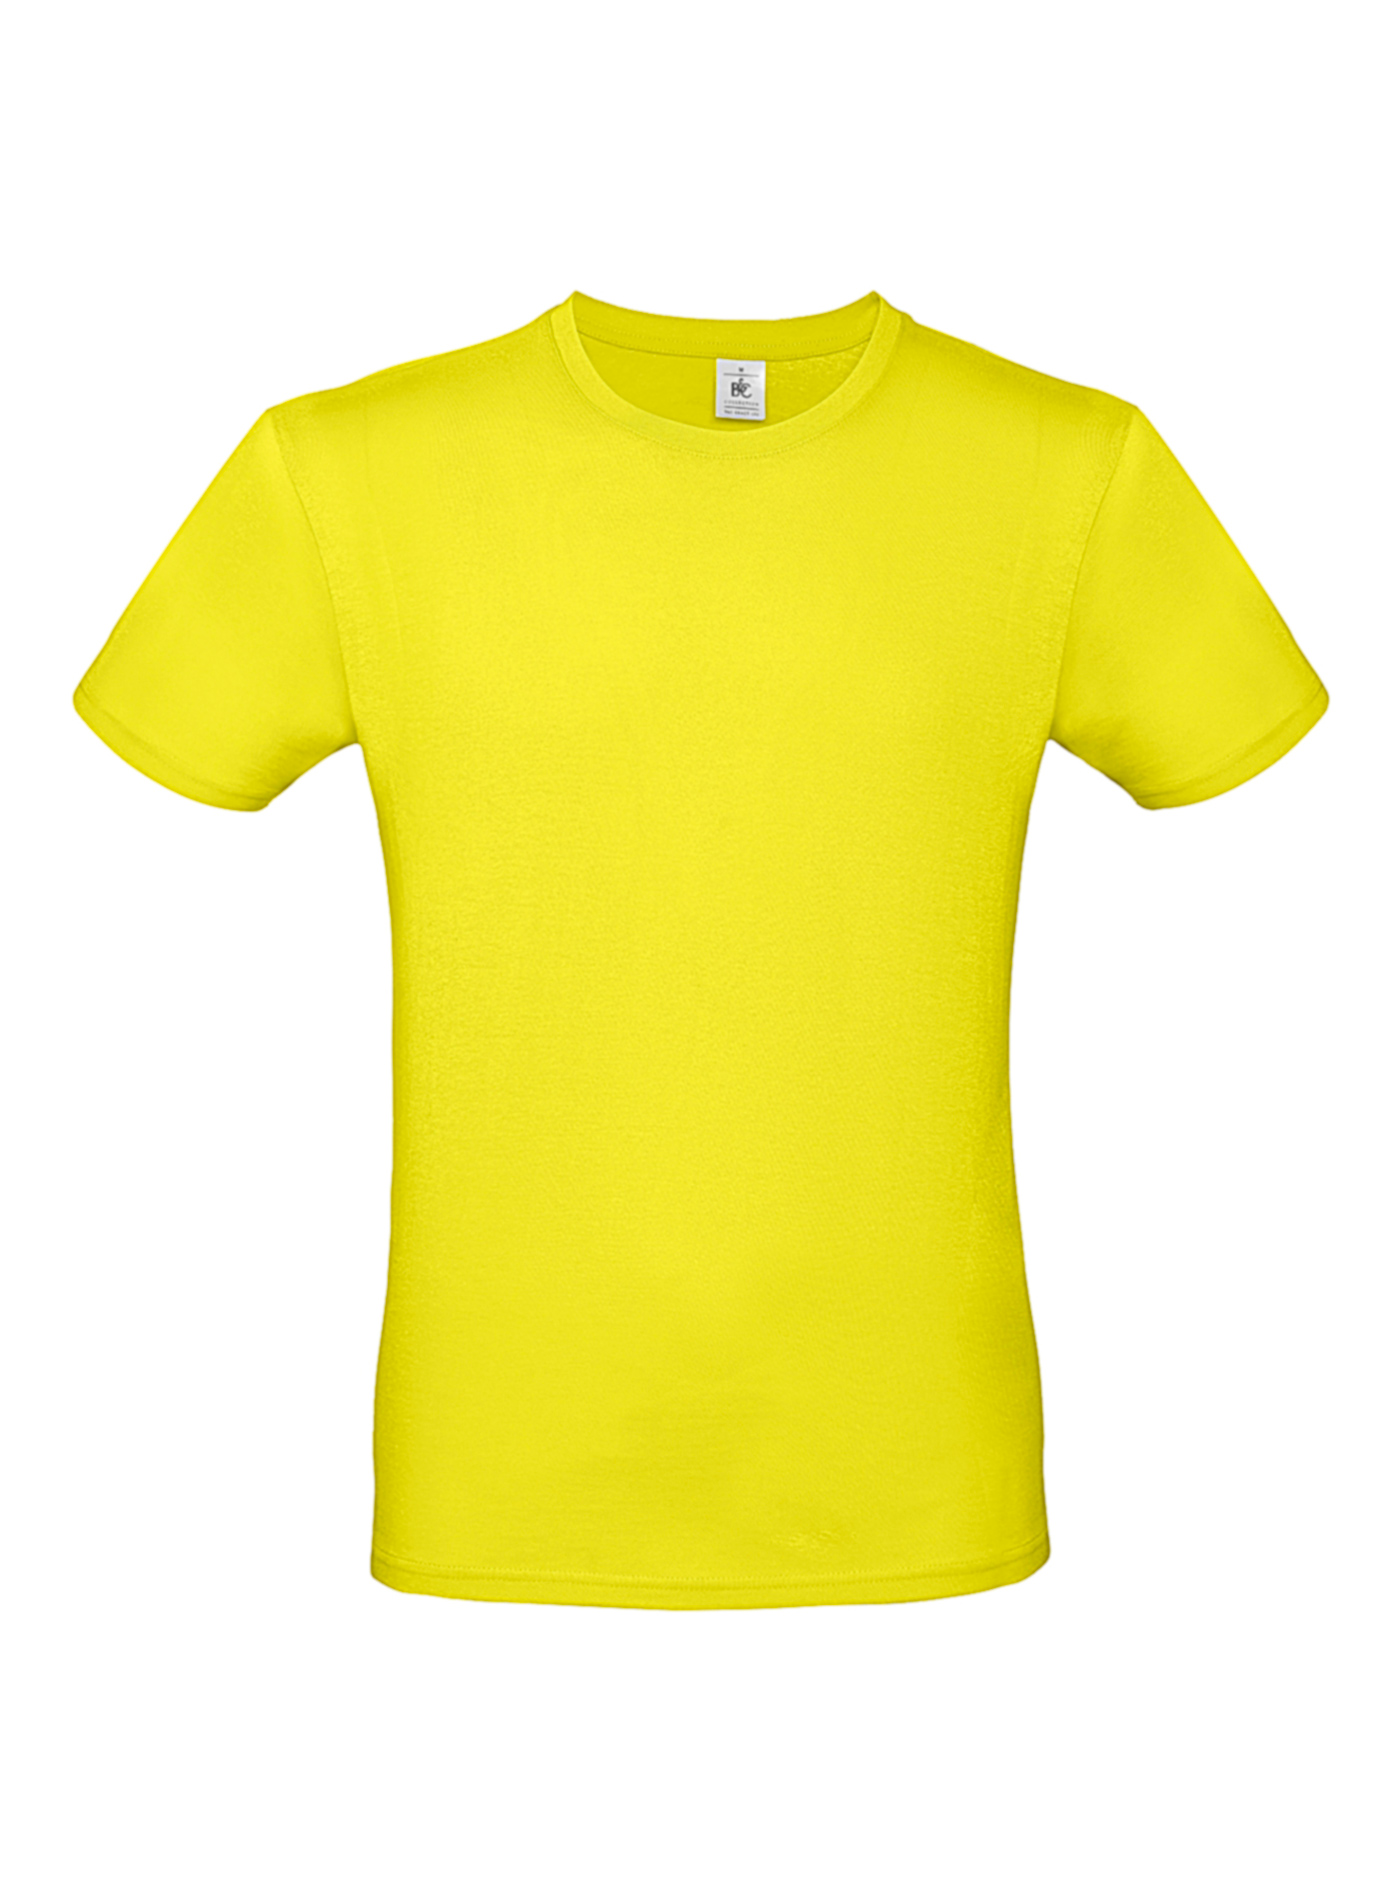 Pánské tričko B&C - Žlutá M